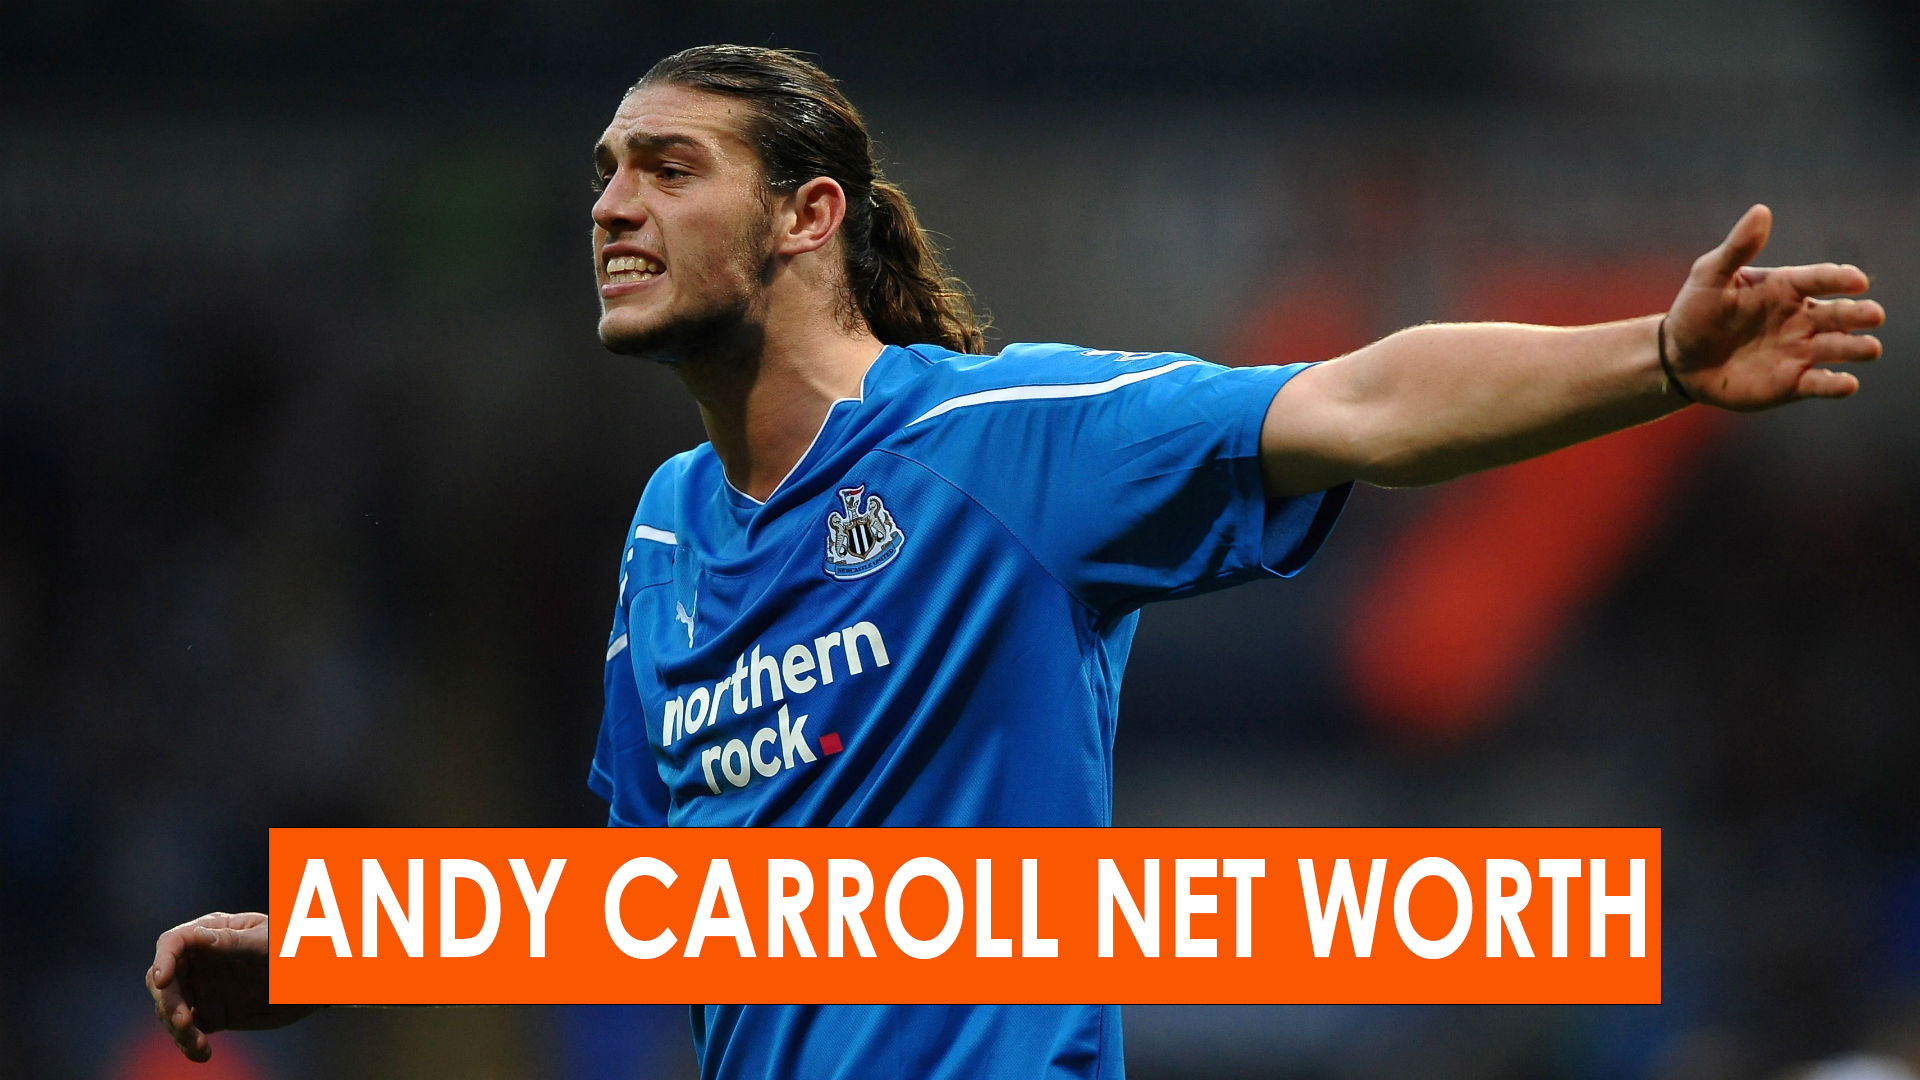 Andy Carroll Net Worth